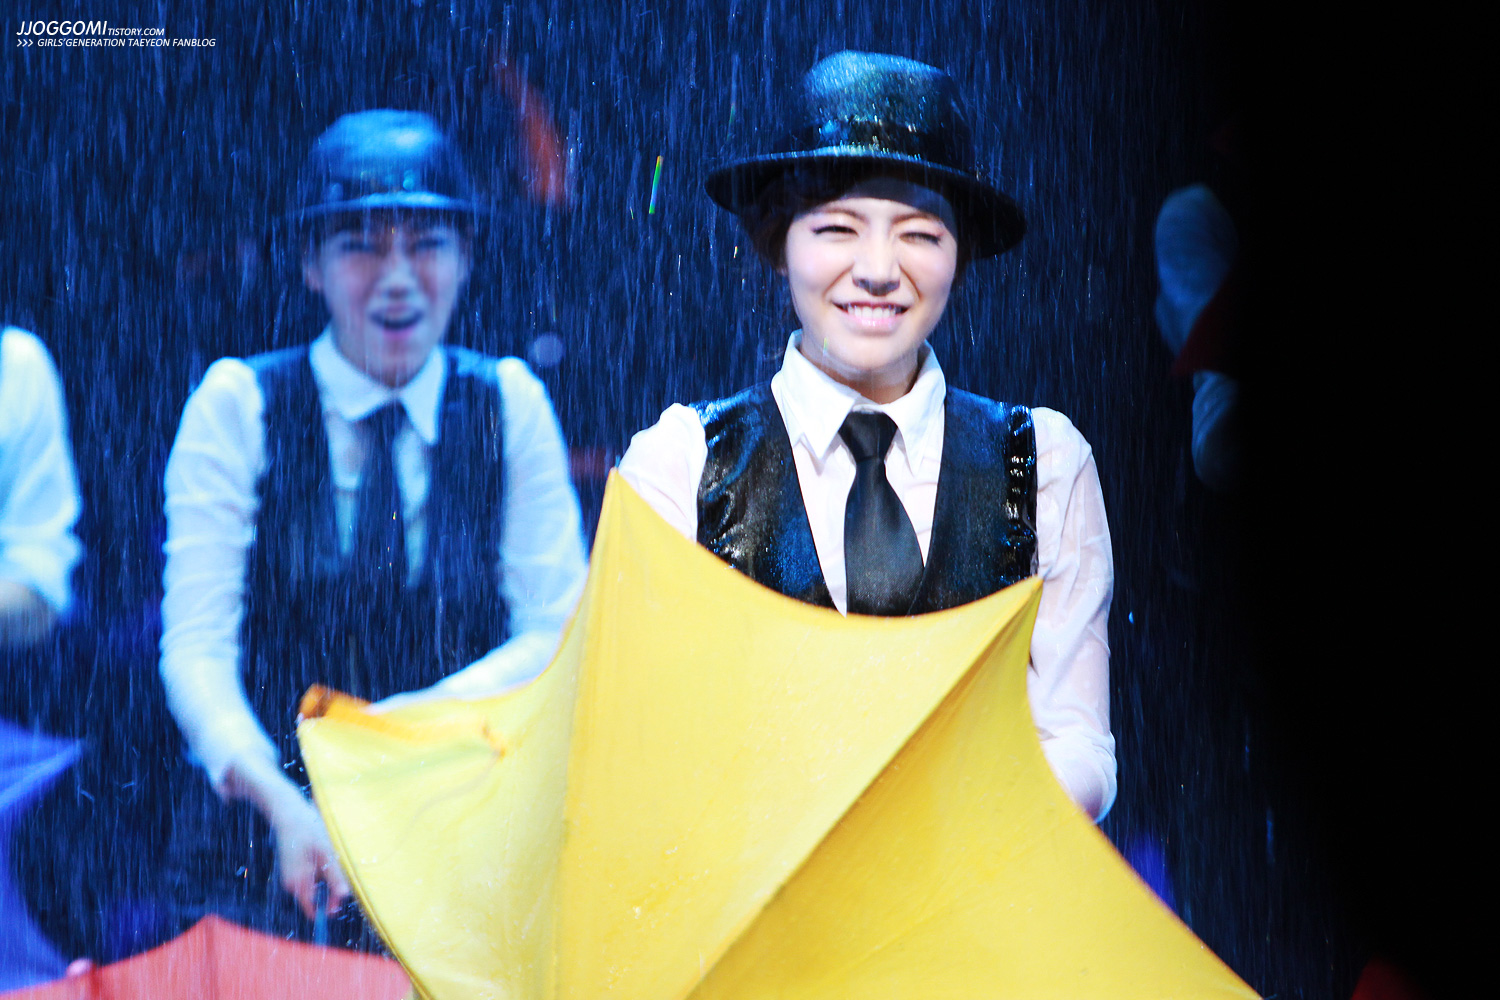 [OTHER][29-04-2014]Sunny sẽ tham gia vở nhạc kịch "SINGIN' IN THE RAIN" - Page 2 247F0040539D98450E6E3D